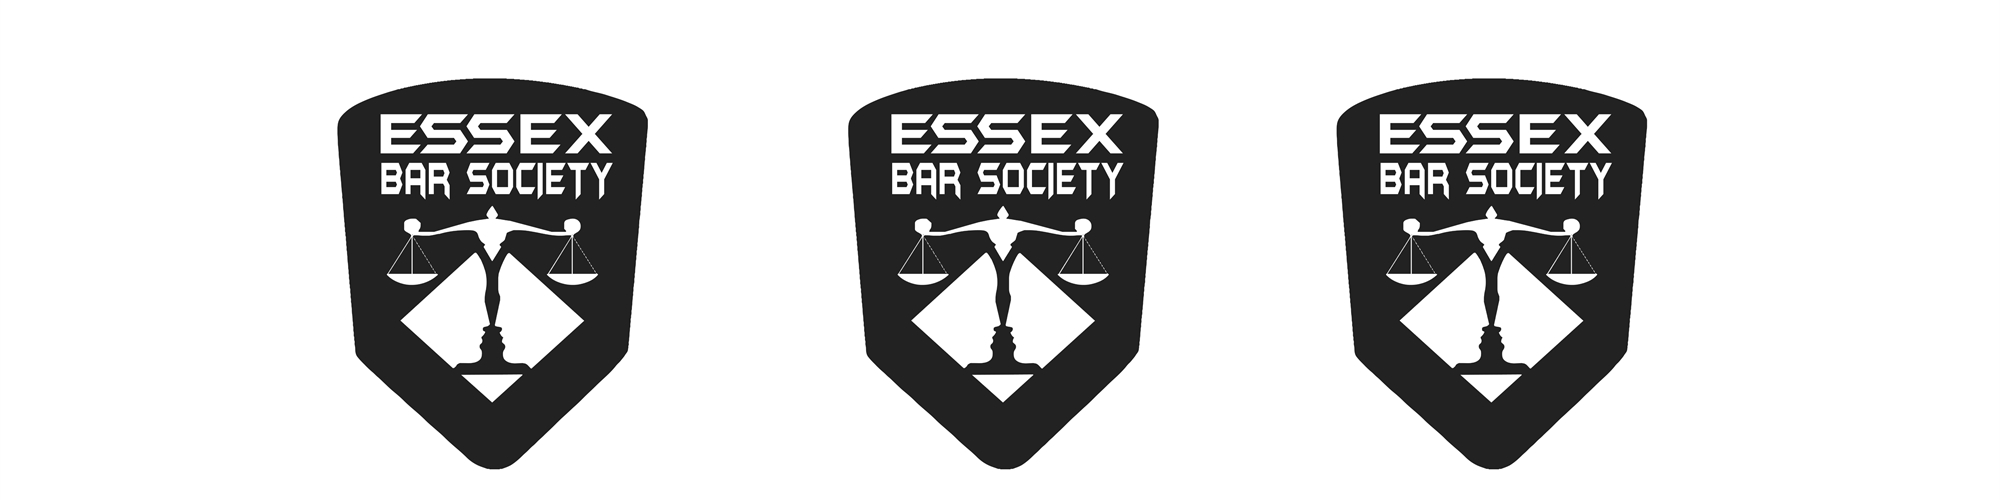 Logo of Essex Bar Society